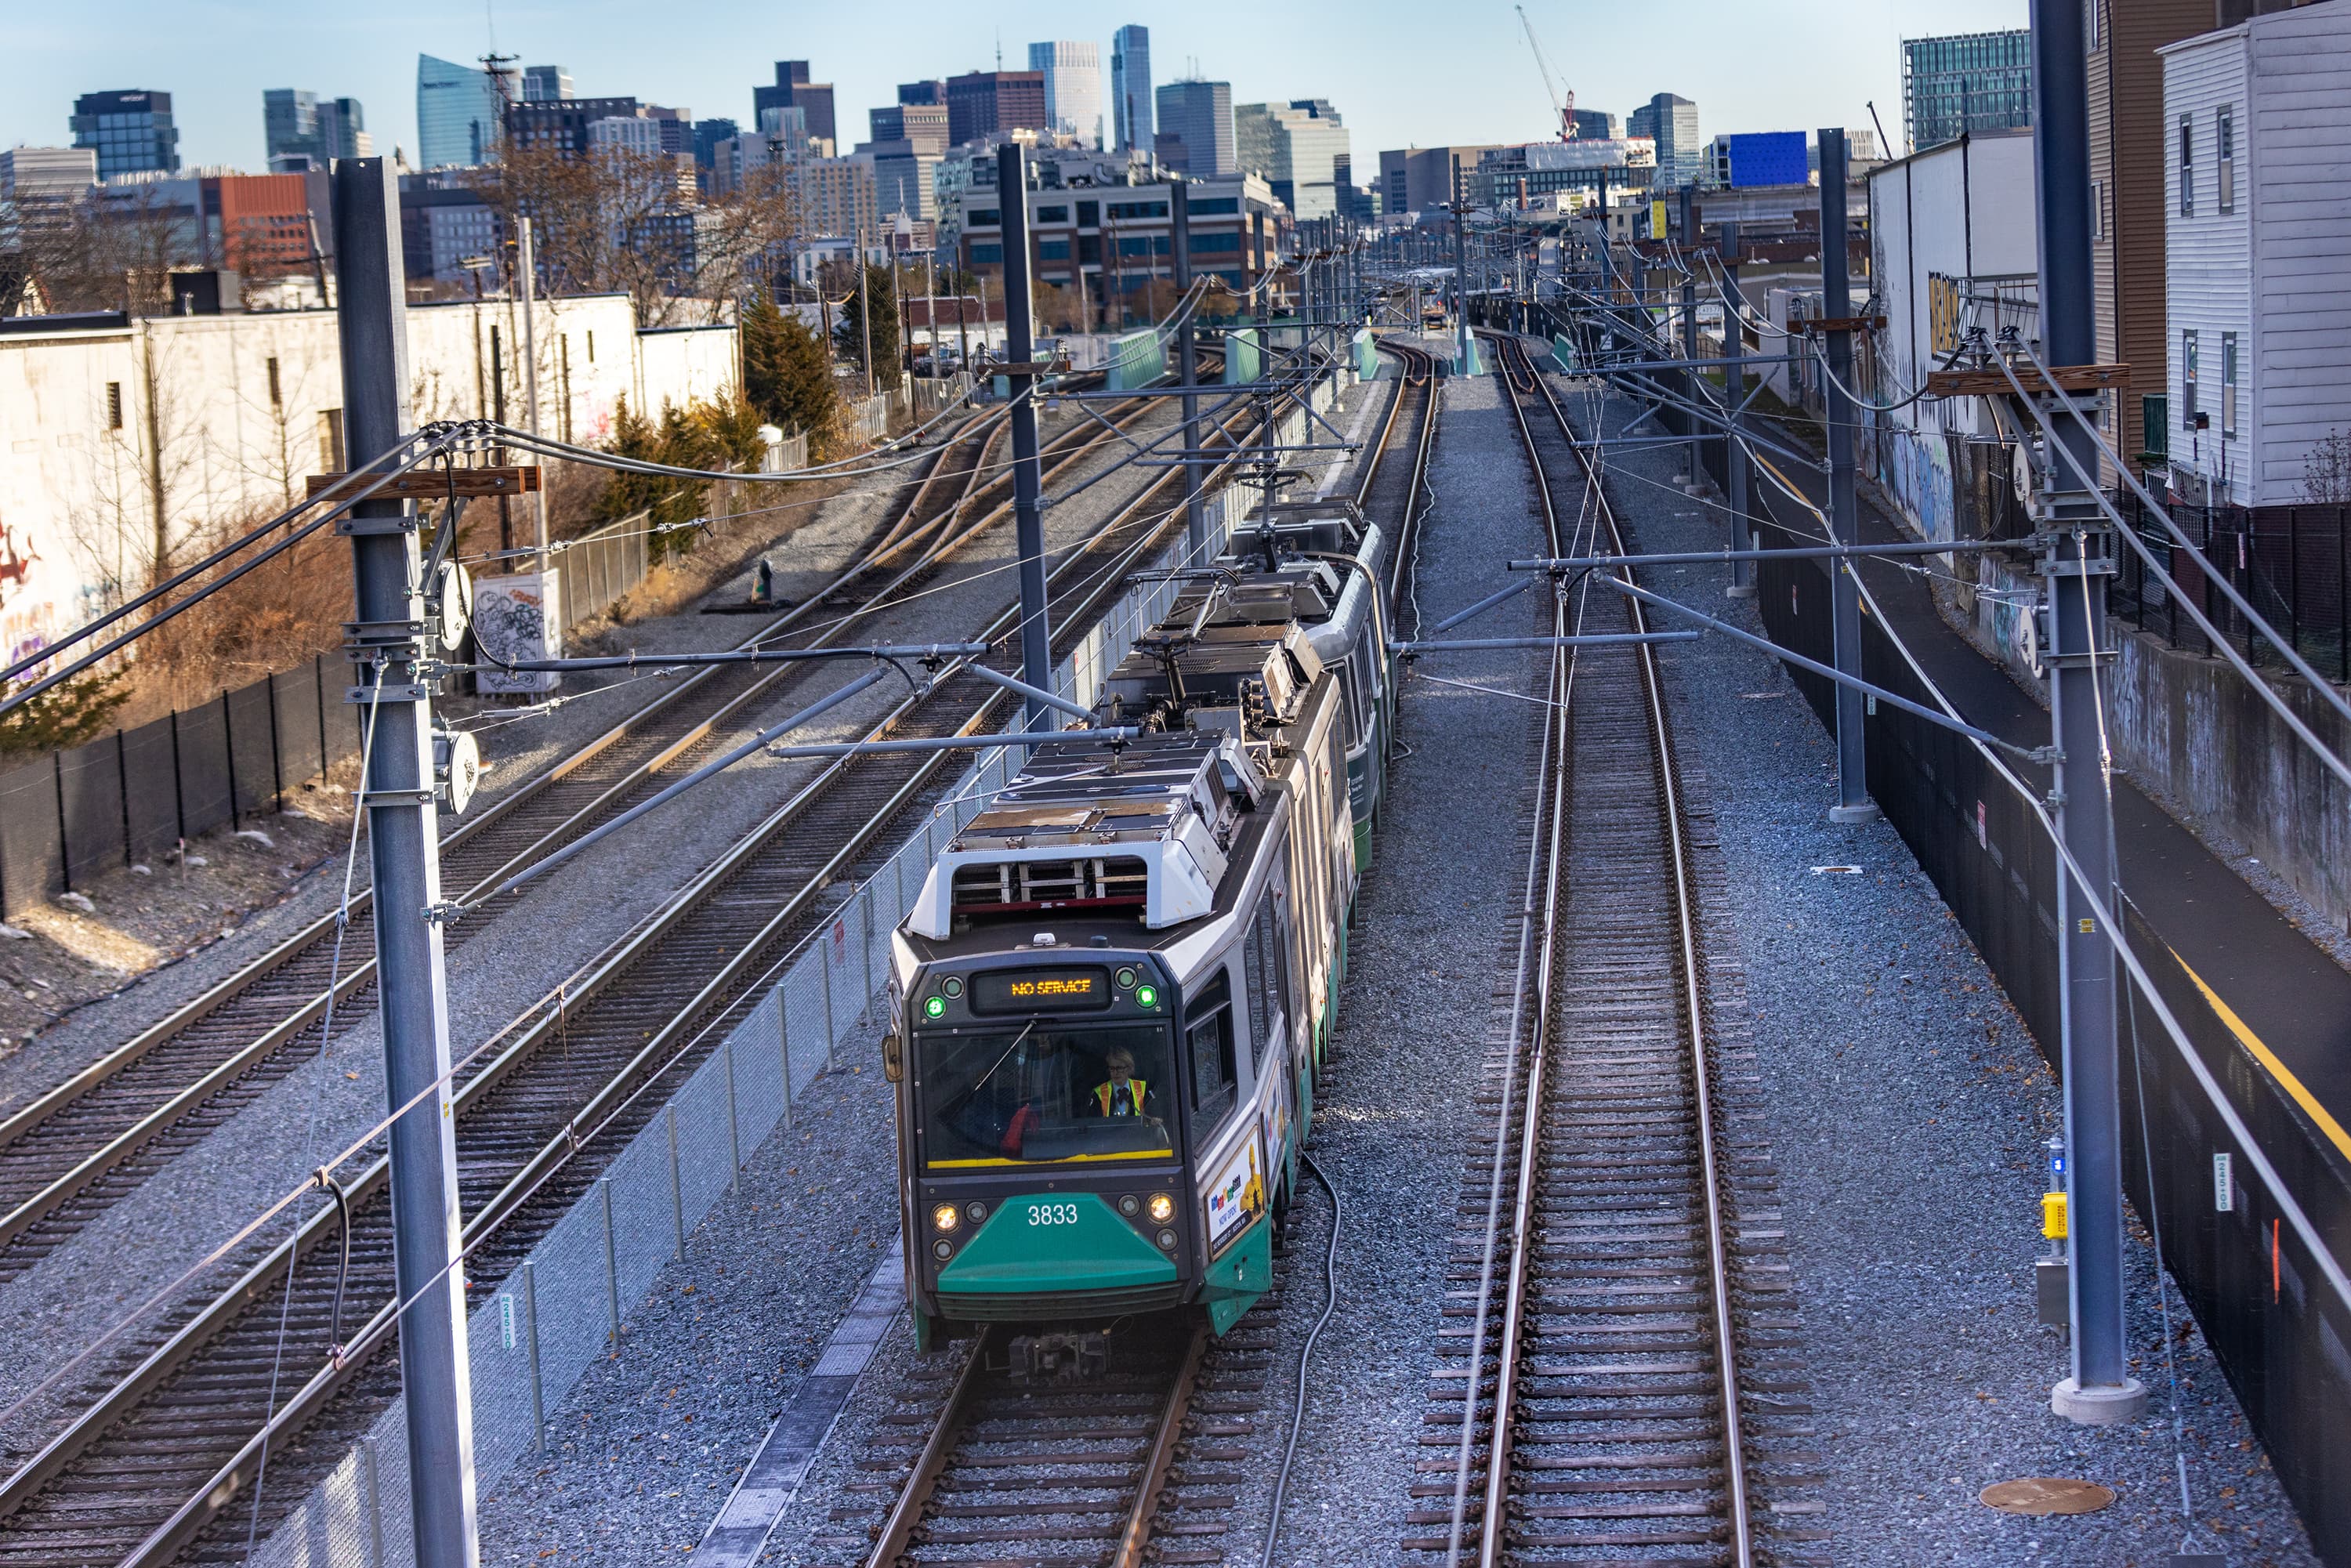 An MBTA Green Line train during testing on Dec. 5. (Jesse Costa/WBUR)